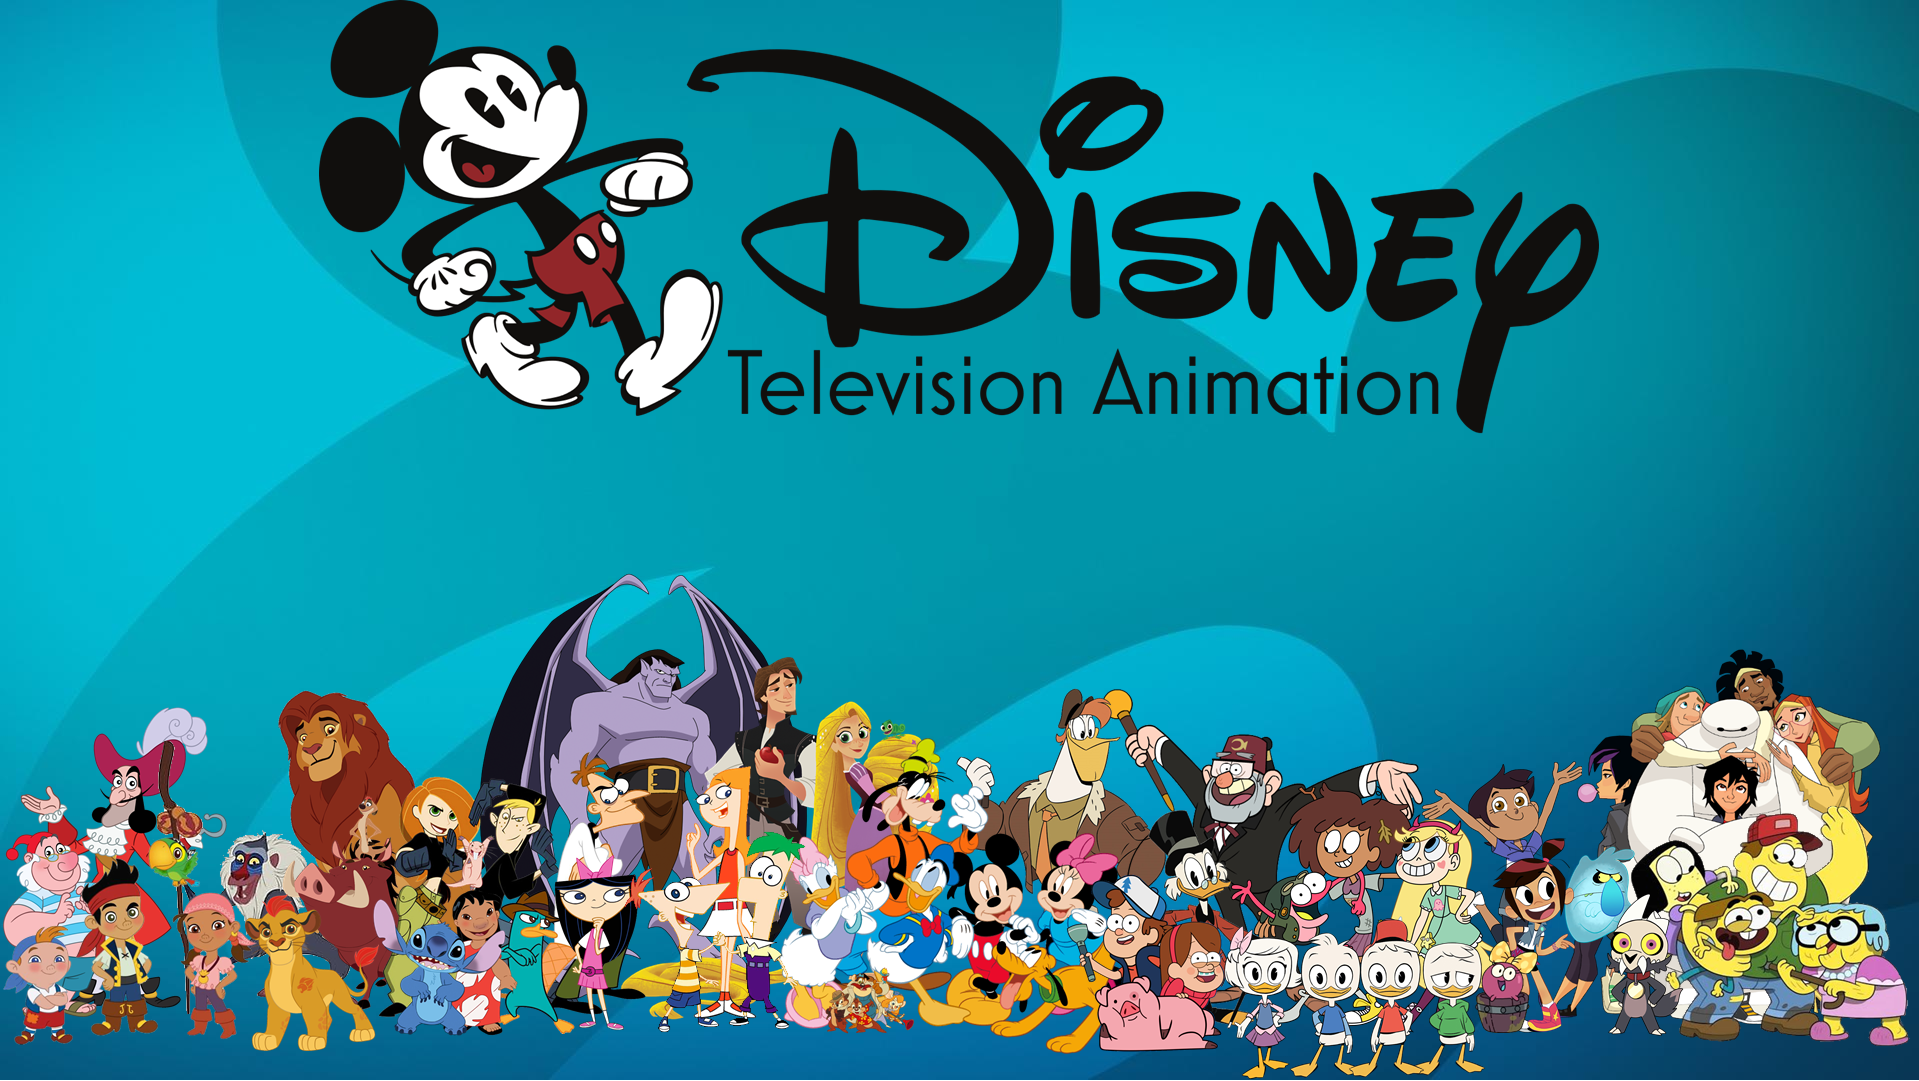 Disney Television Animation - Wallpaper by Disneydude94 on DeviantArt